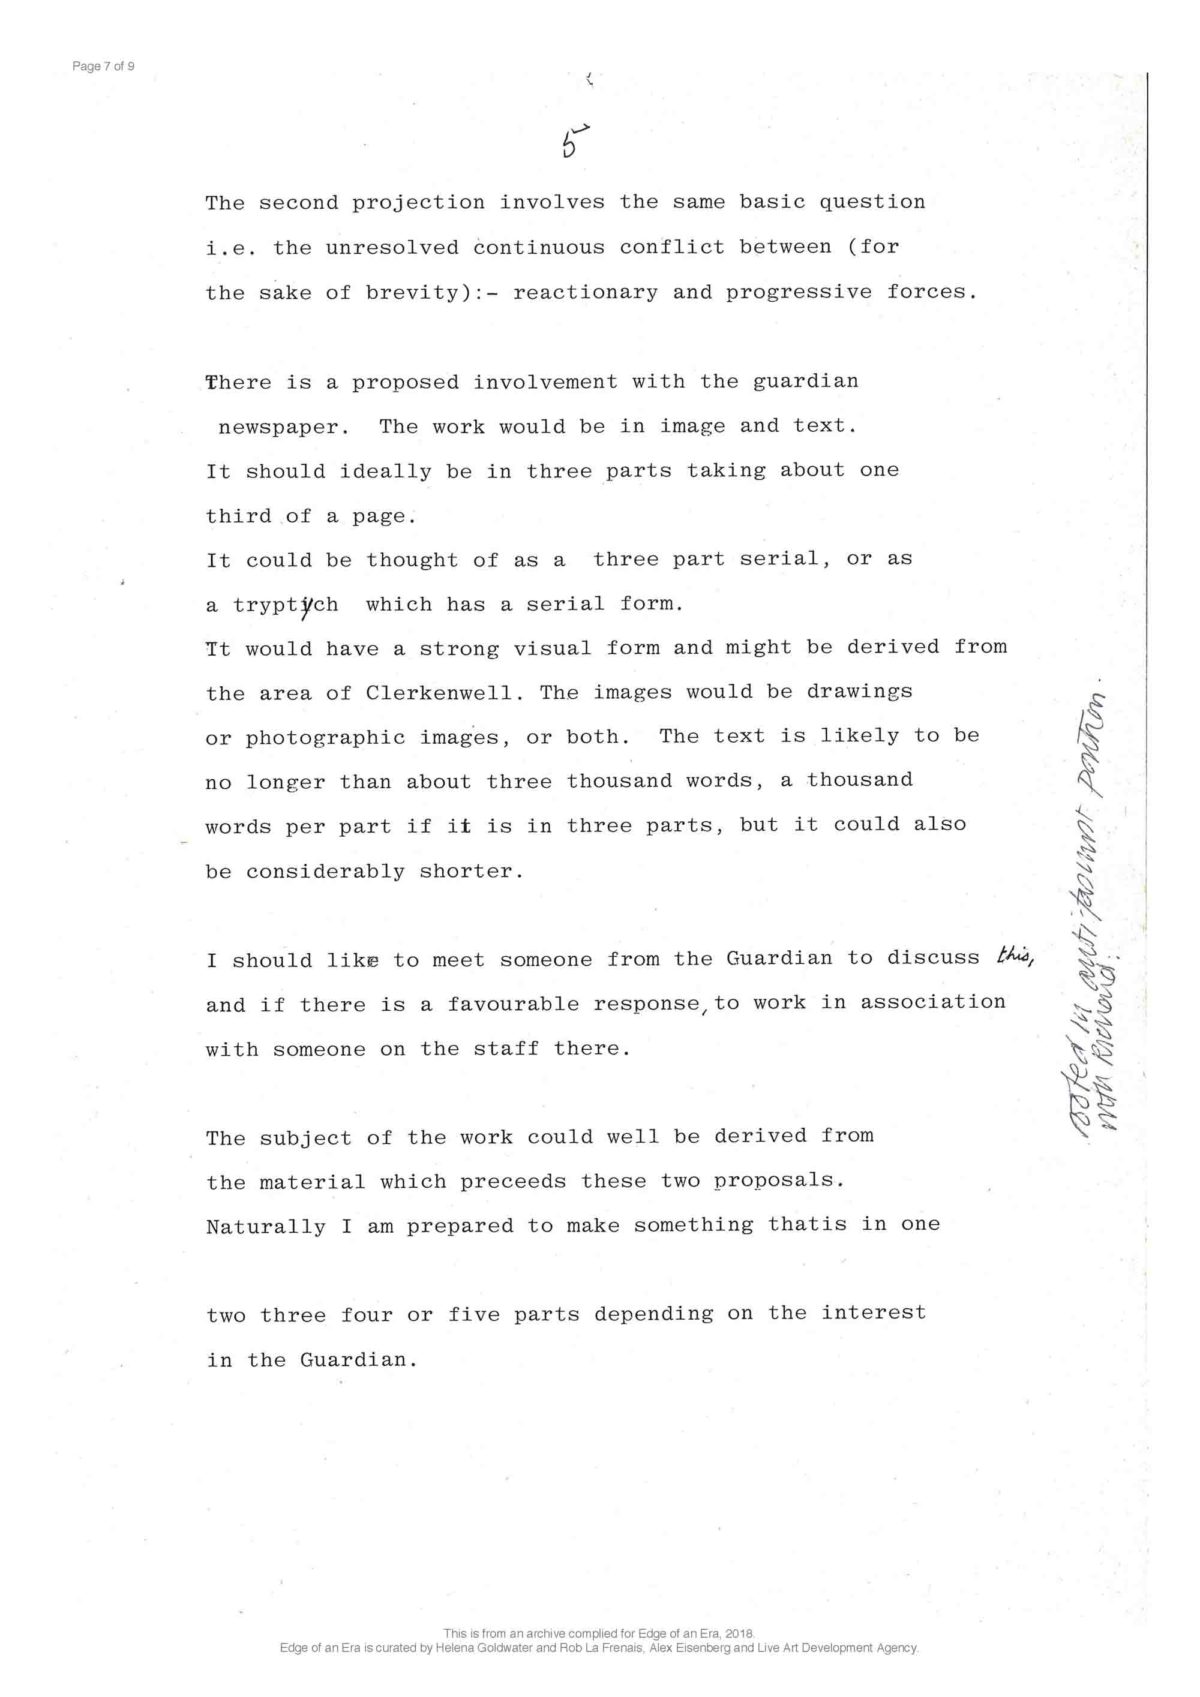 Stuart Brisley, Correspondence, 1988 (Page 7 of 9)